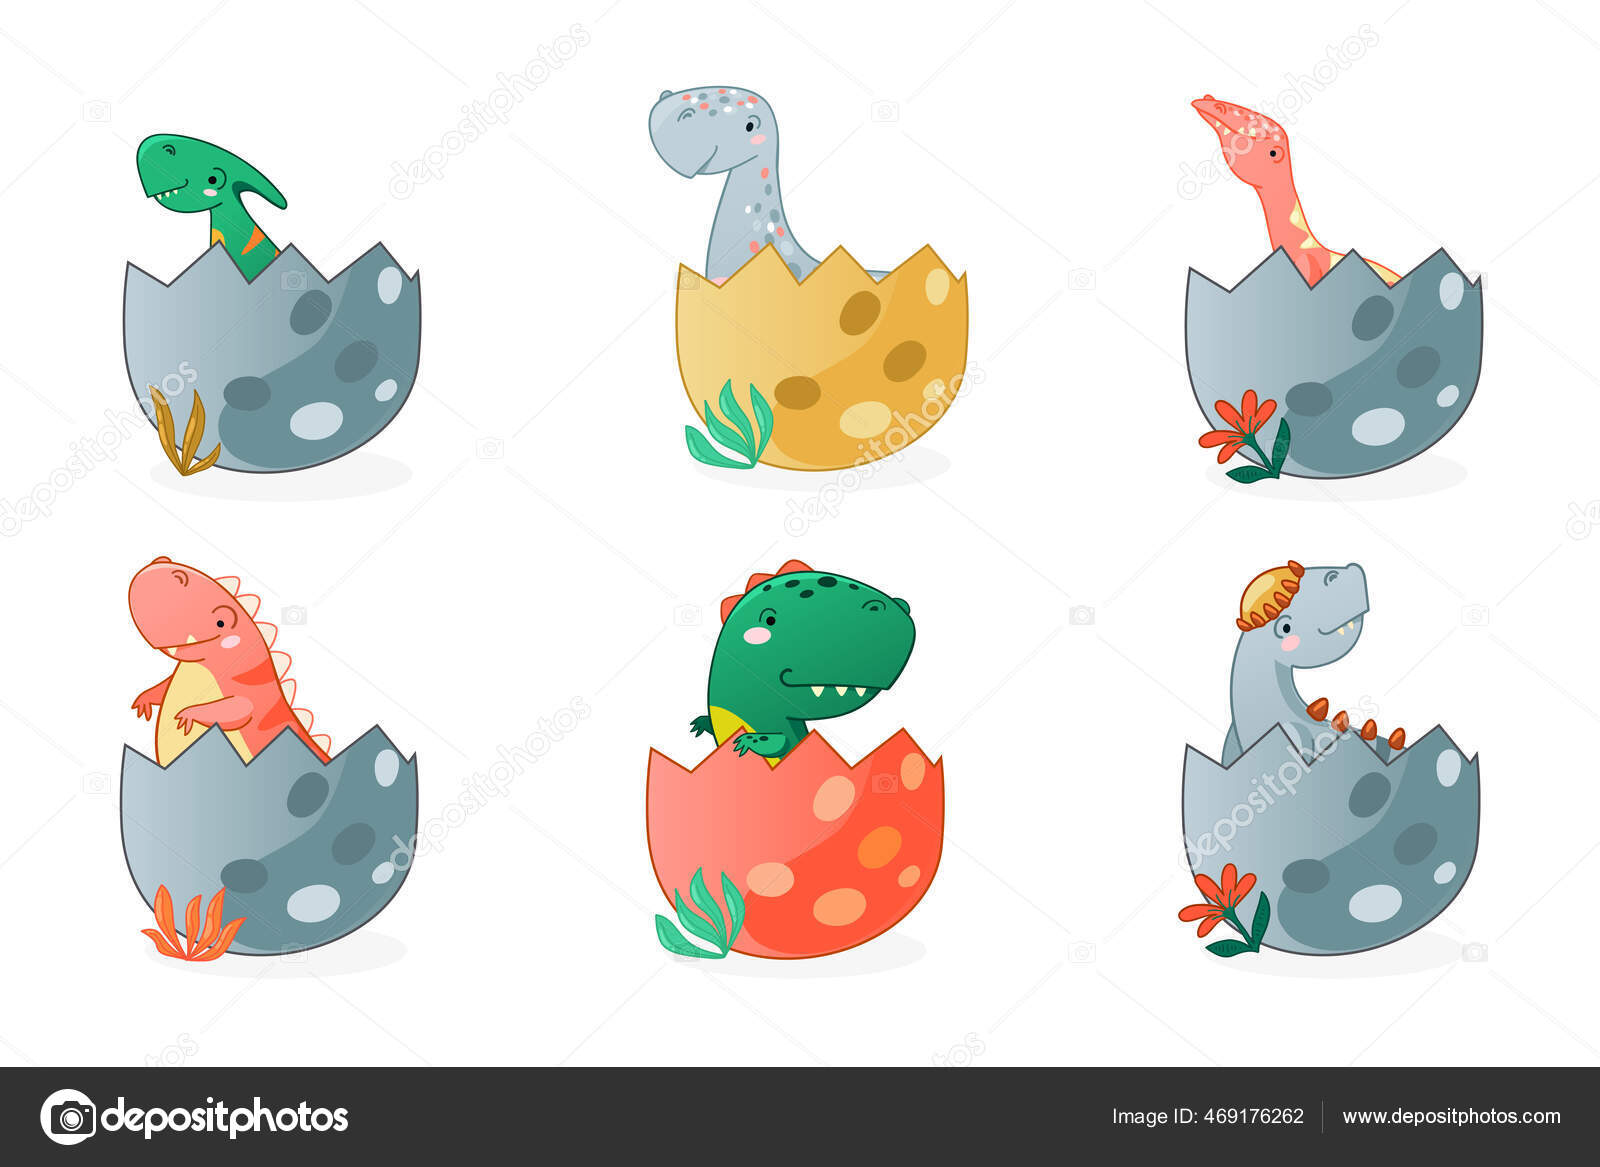 Dinosaur Illustration Hd Transparent, Jumping Animal Dinosaur Illustration,  Jumping Animal, Cartoon Illustration, Dinosaur Illustration PNG Image For  Free Download